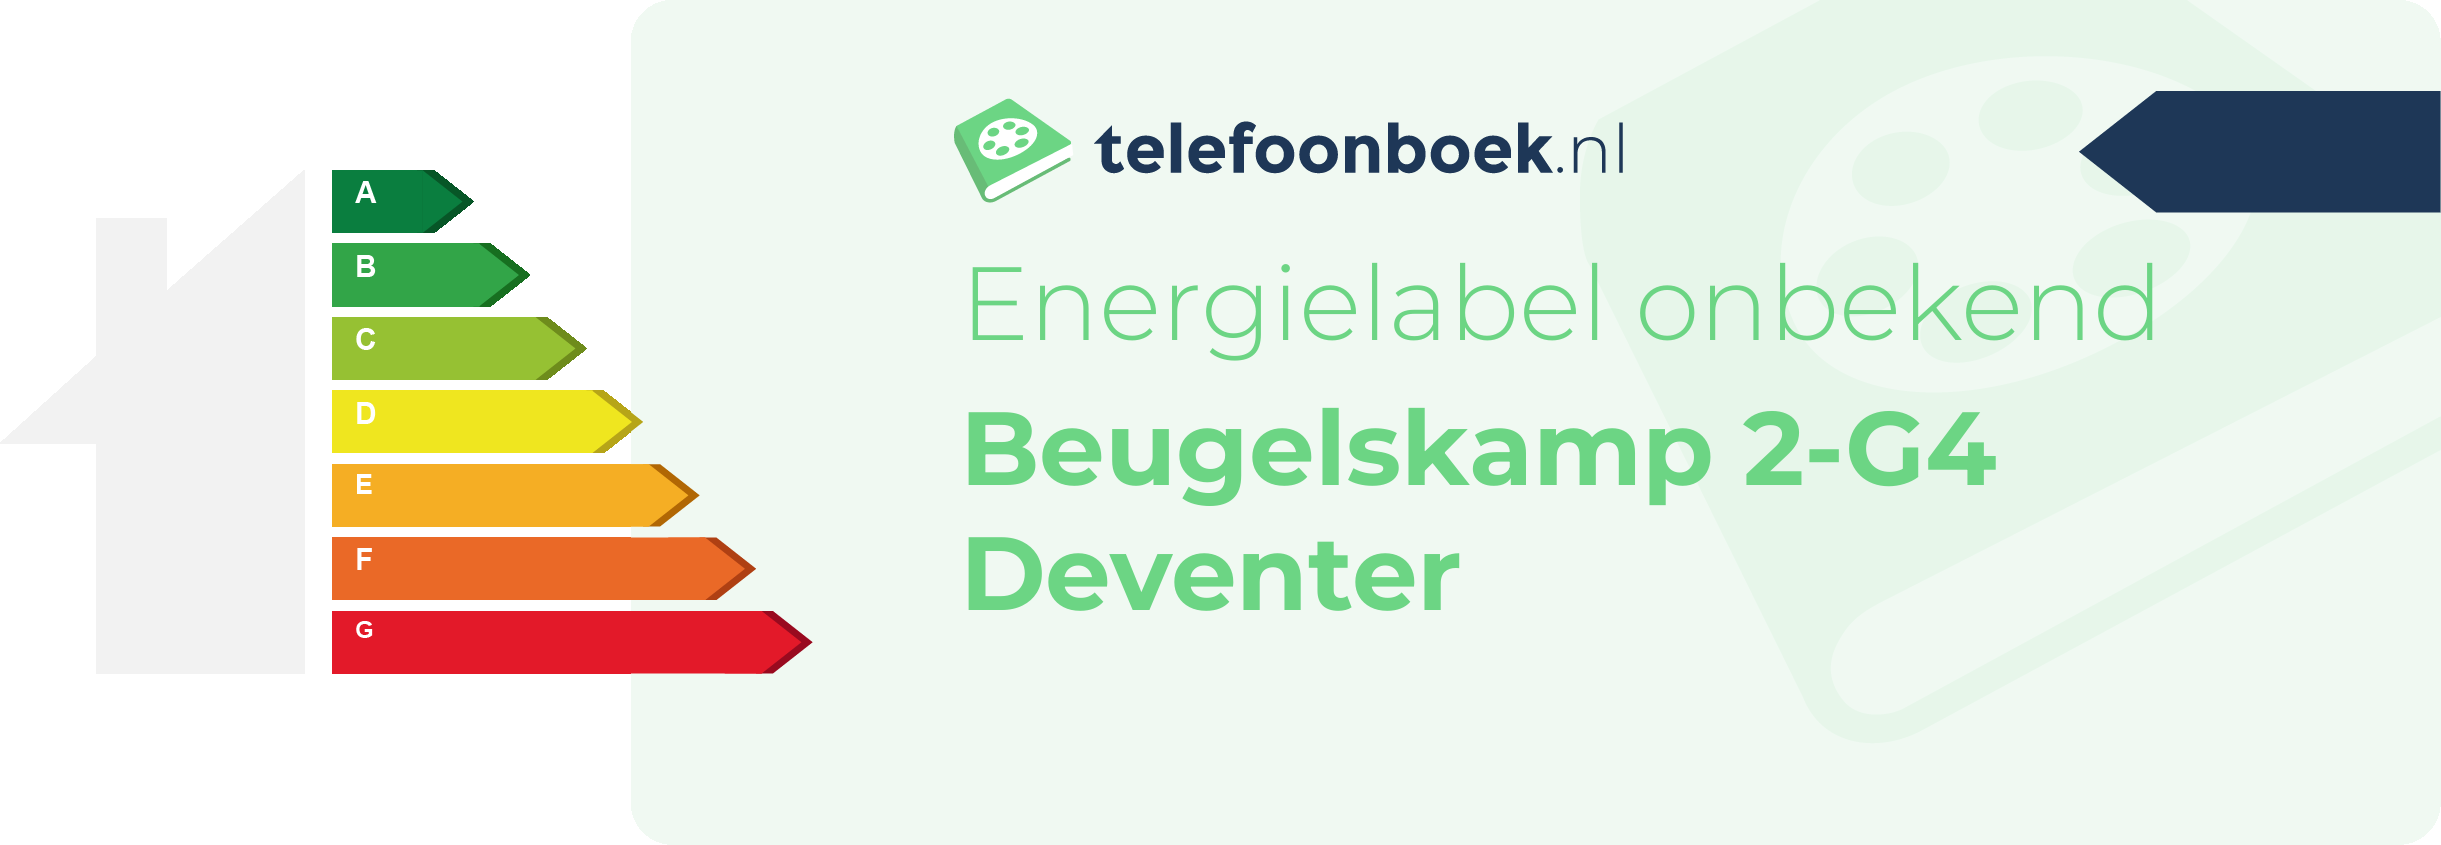 Energielabel Beugelskamp 2-G4 Deventer